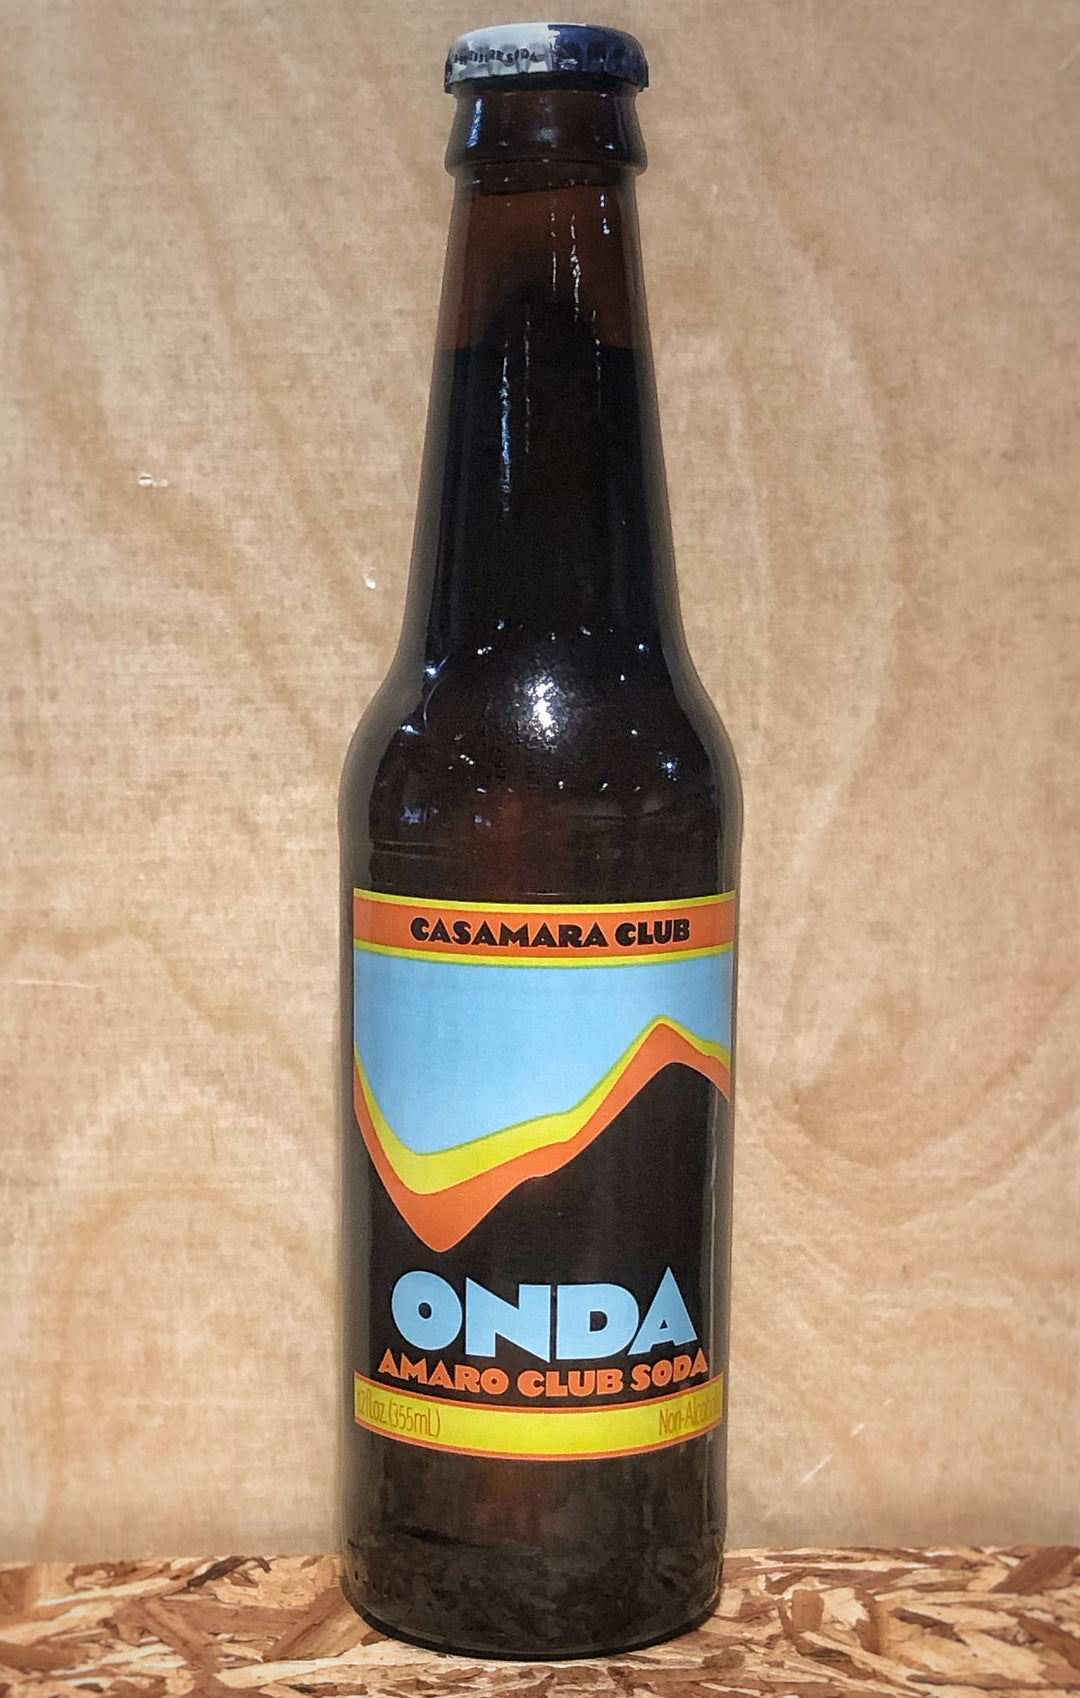 Casamara Club 'Onda' Non-Alcoholic Wild Limonata Leisure Soda (Detroit, MI)